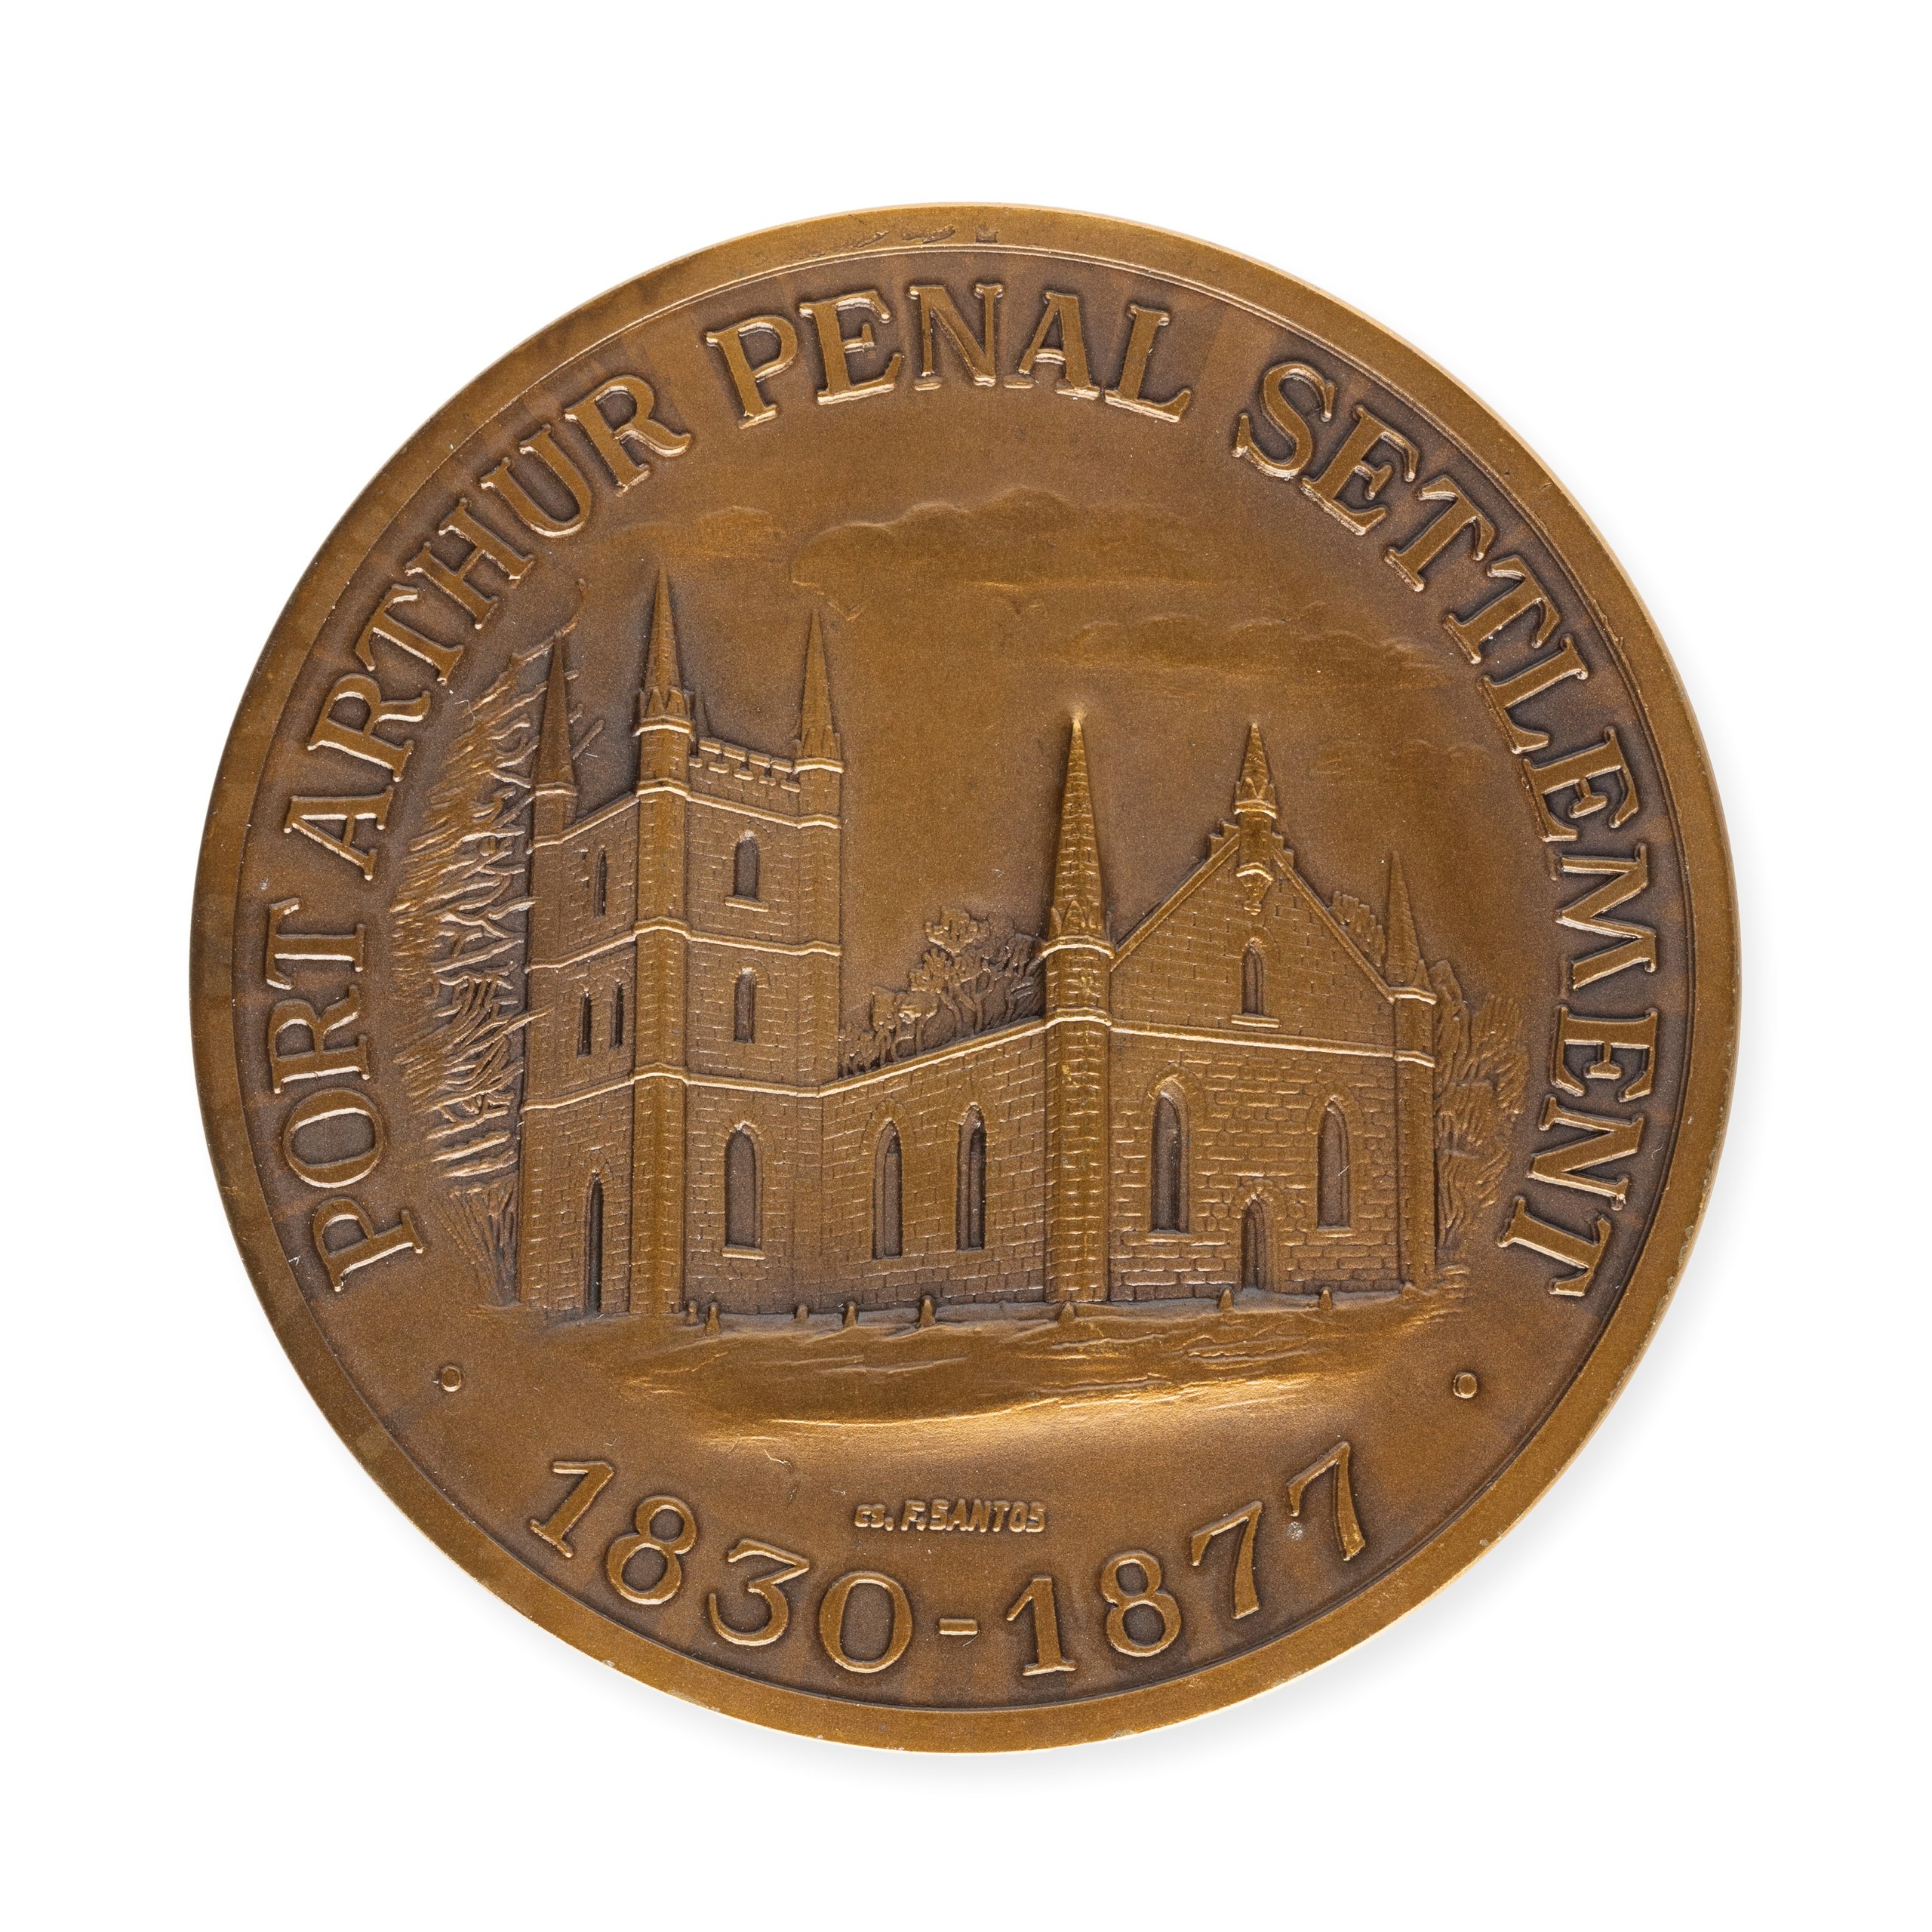 Port Arthur 150th Anniversary commemorative medallion